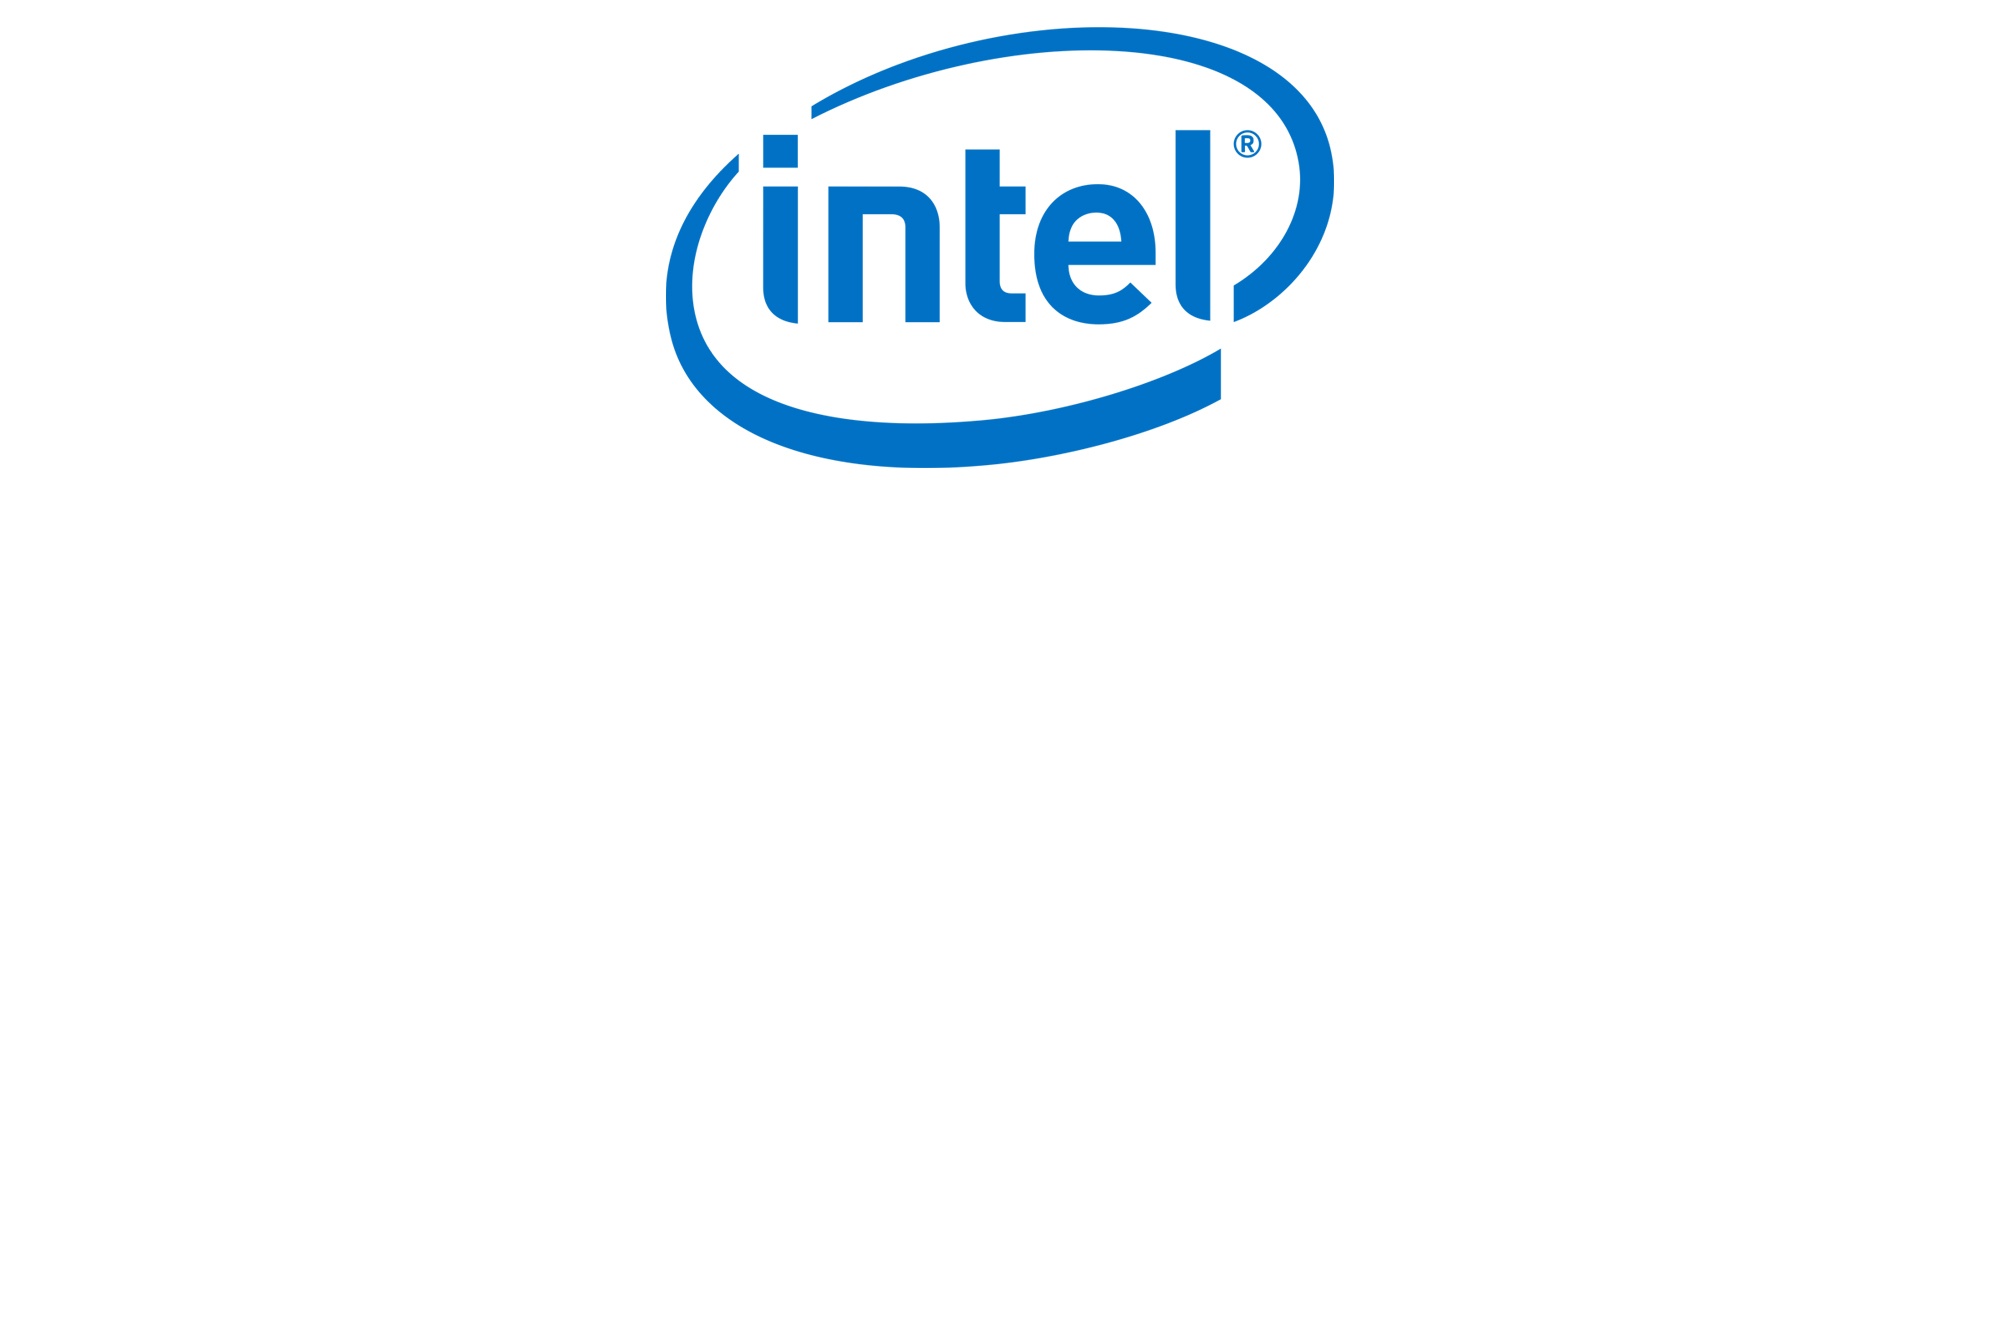 Интел логотип. Intel Core 2 Duo лого. Intel на белом фоне. Интел без фона. Надпись Интел.